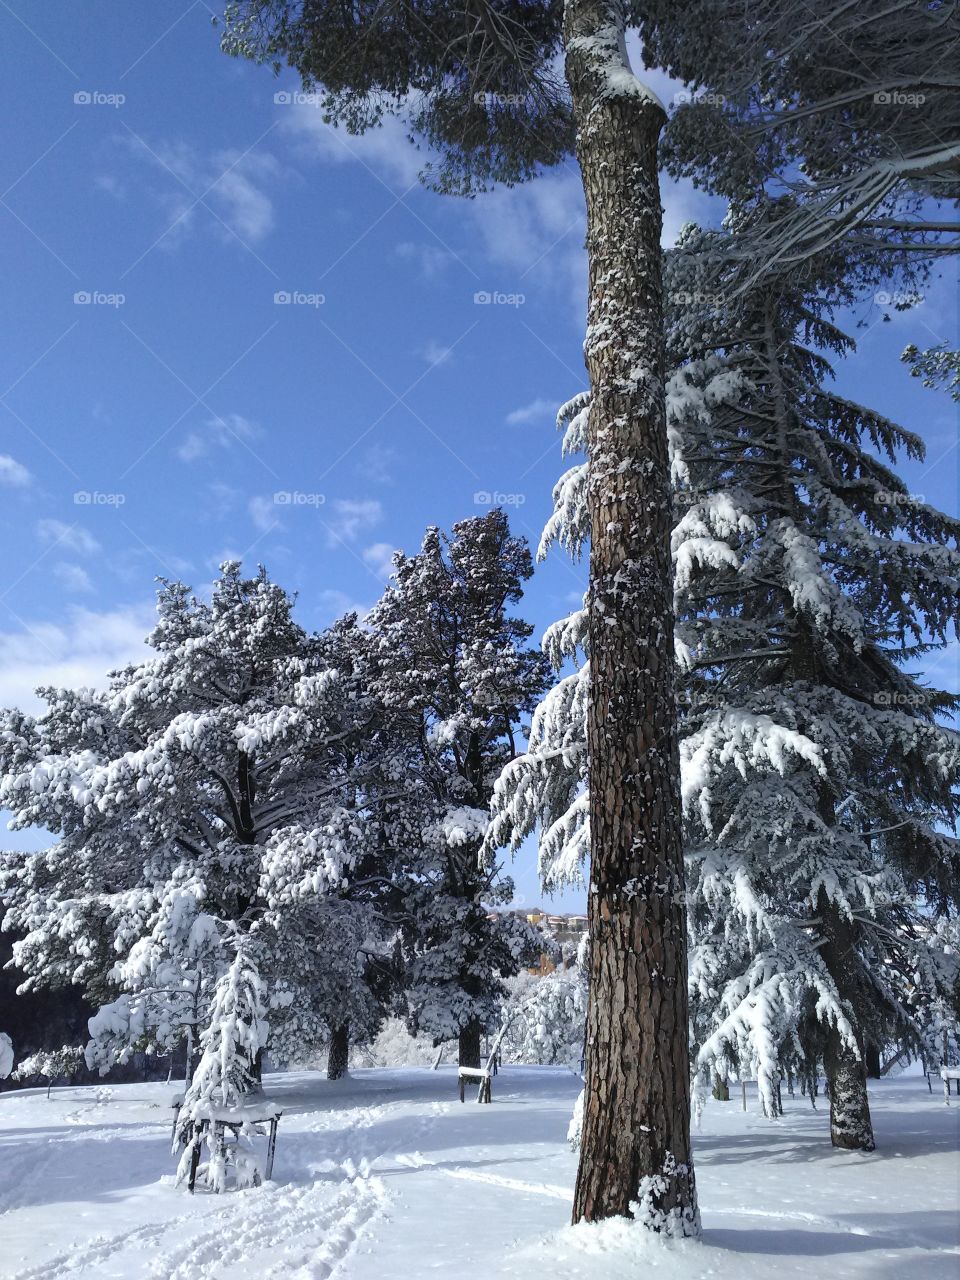 Snow, Winter, Tree, Wood, Cold